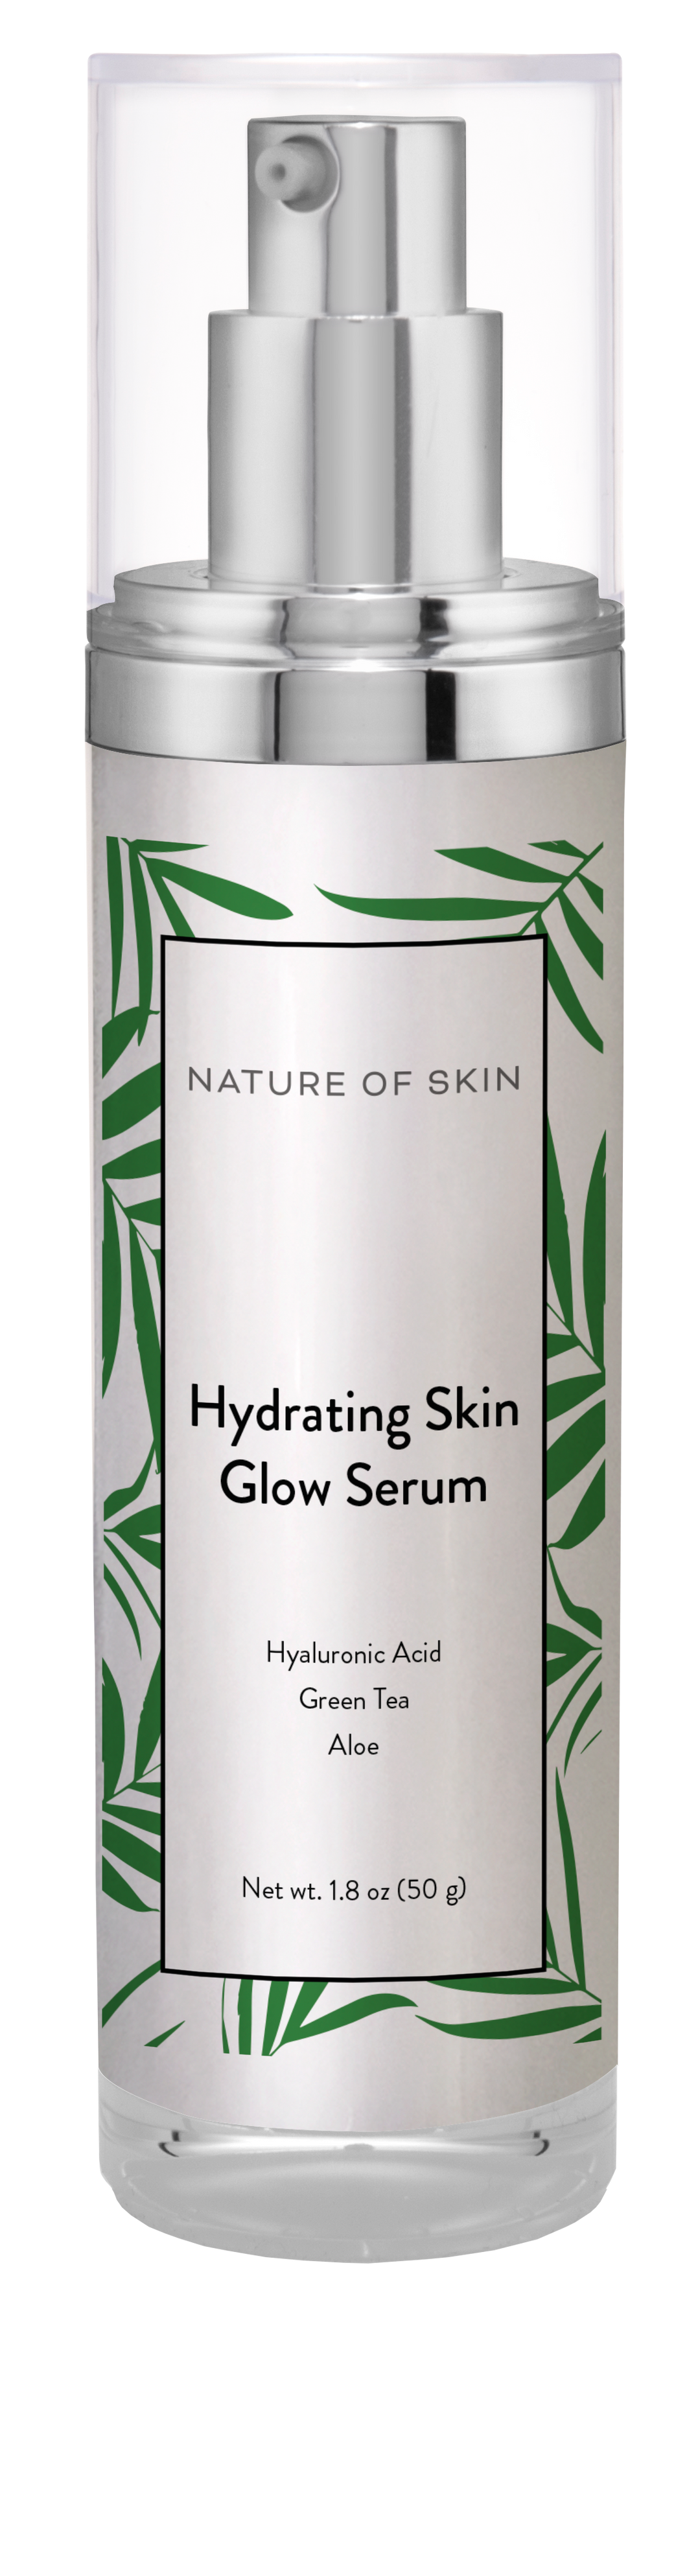 Hydrating Skin Glow Serum